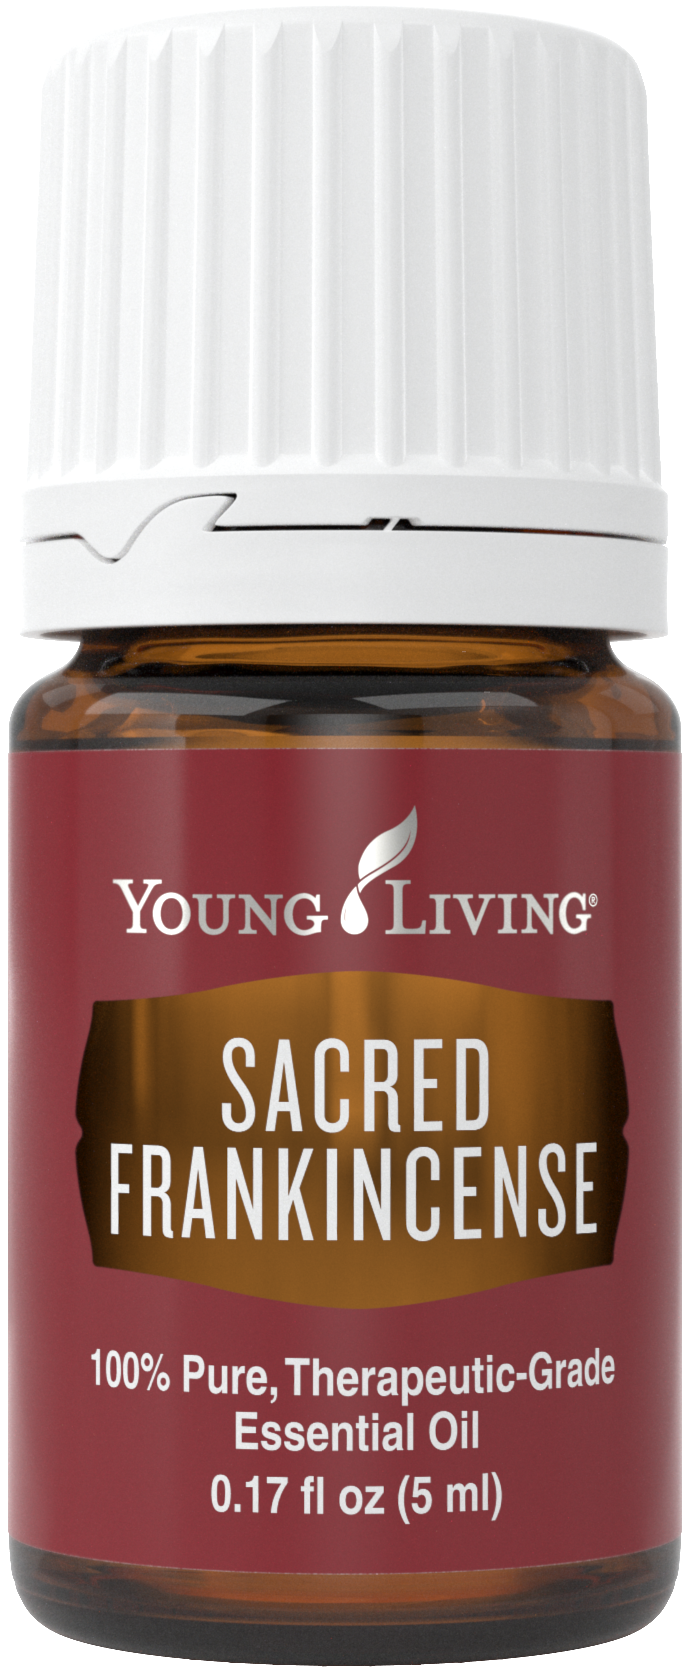 Sacred Frankincense 5ml Silo.png